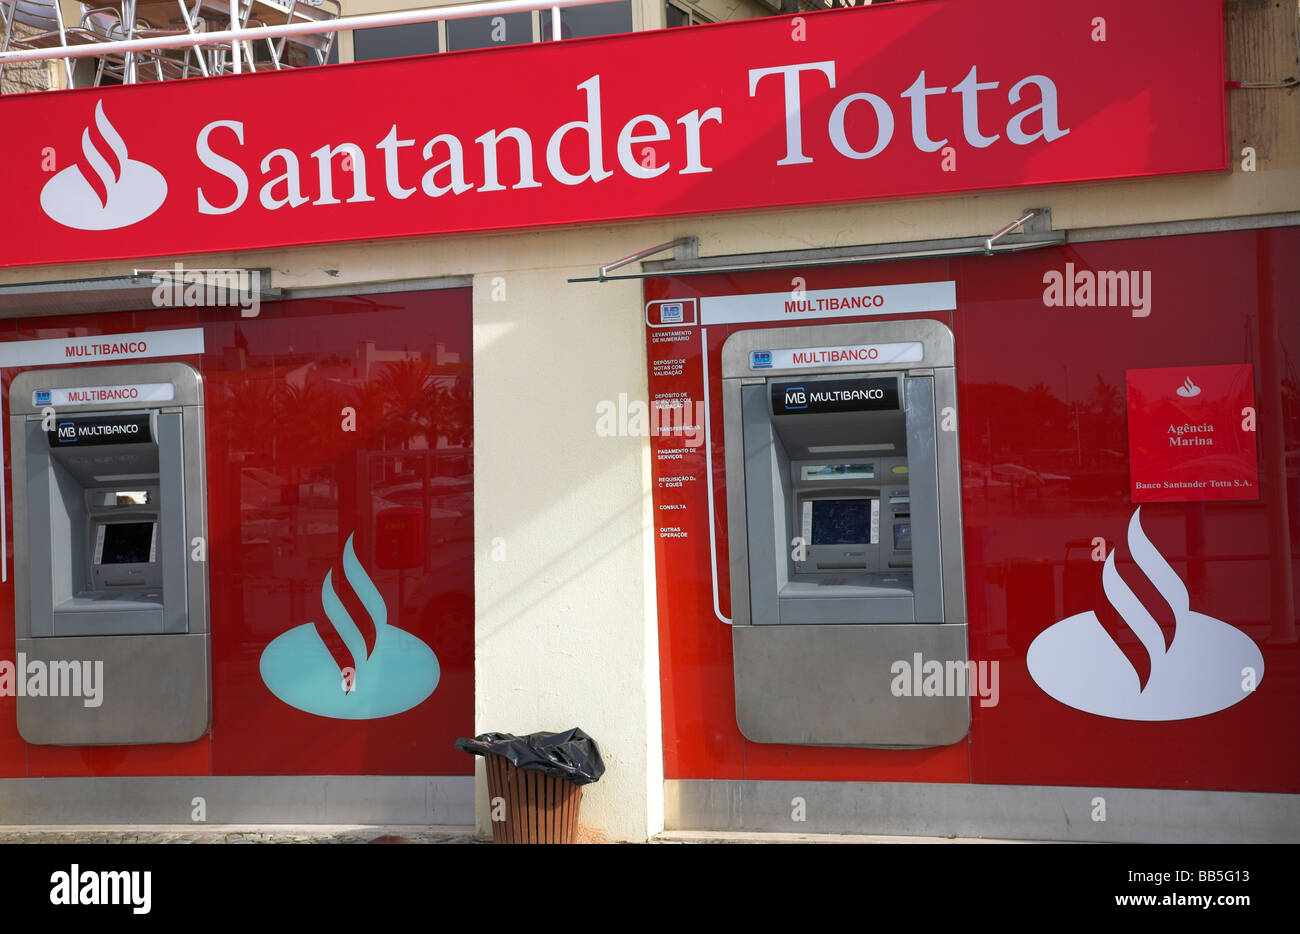 Santander Totta bank cash machines Stock Photo